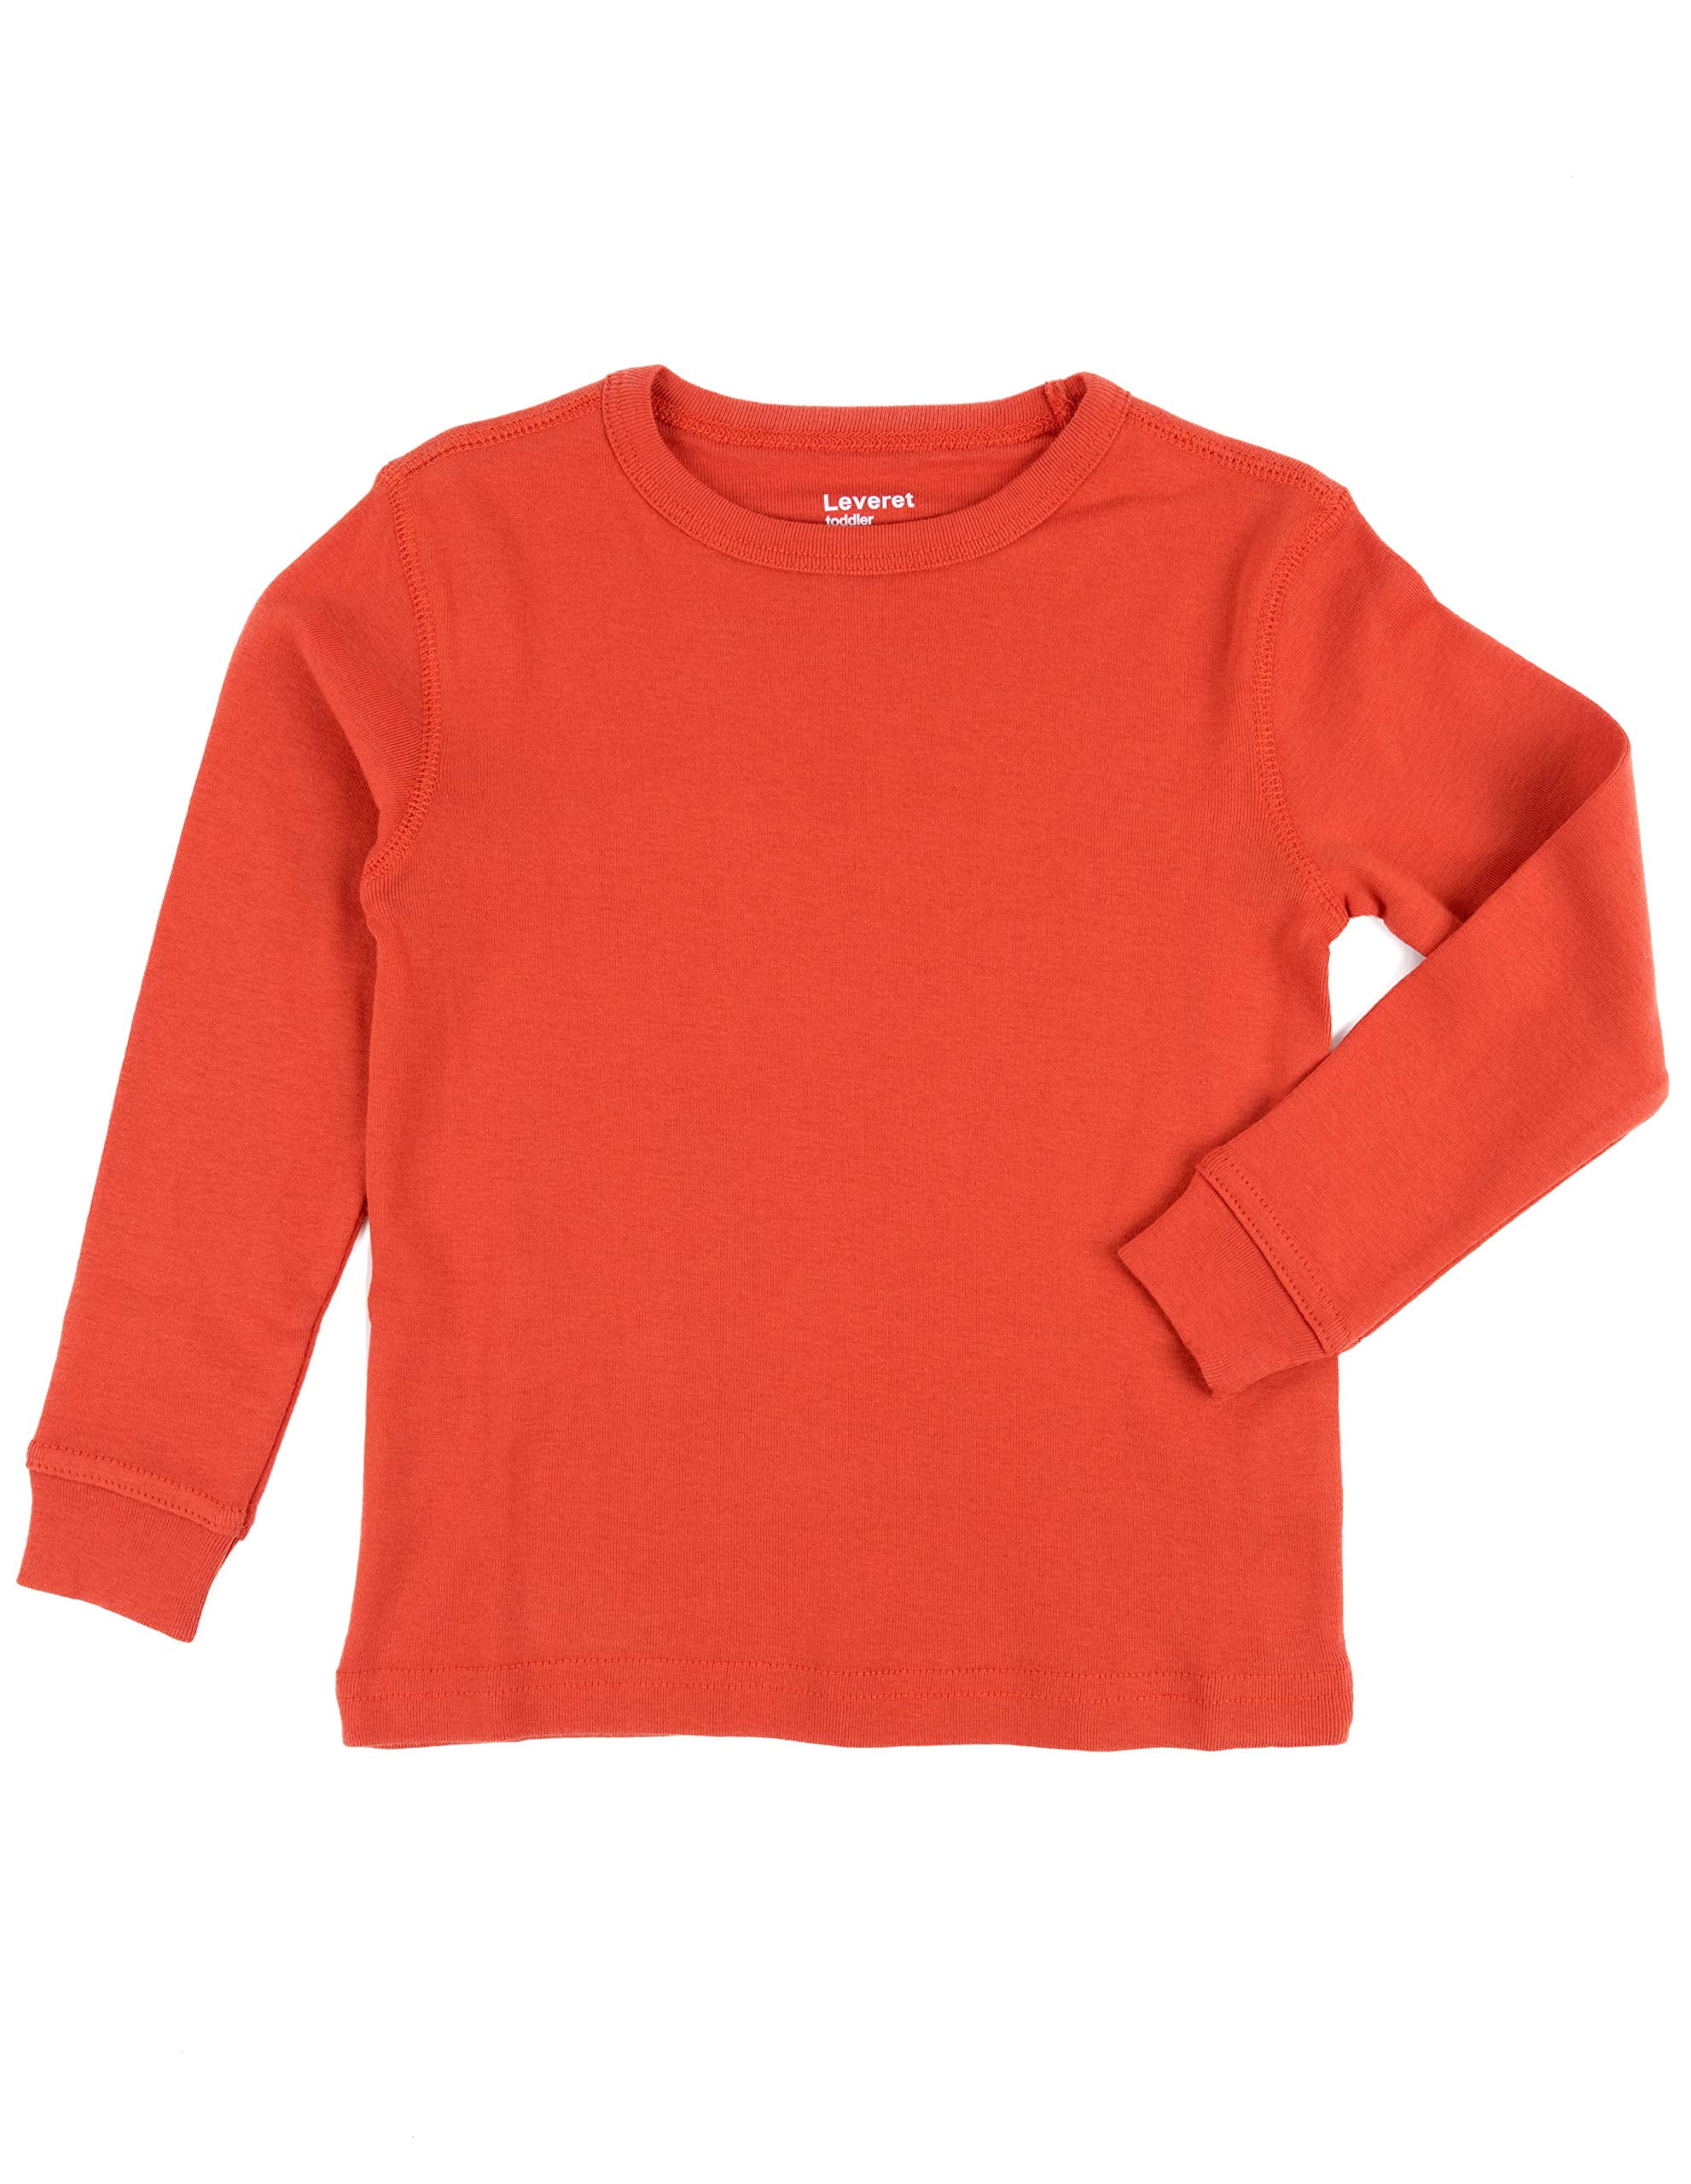 DOTDOG Unisex Kids Soft 100% Cotton Jersey Long-Sleeve T-Shirts Crewneck Tees for Boys or Girls Age 3-12 Years 